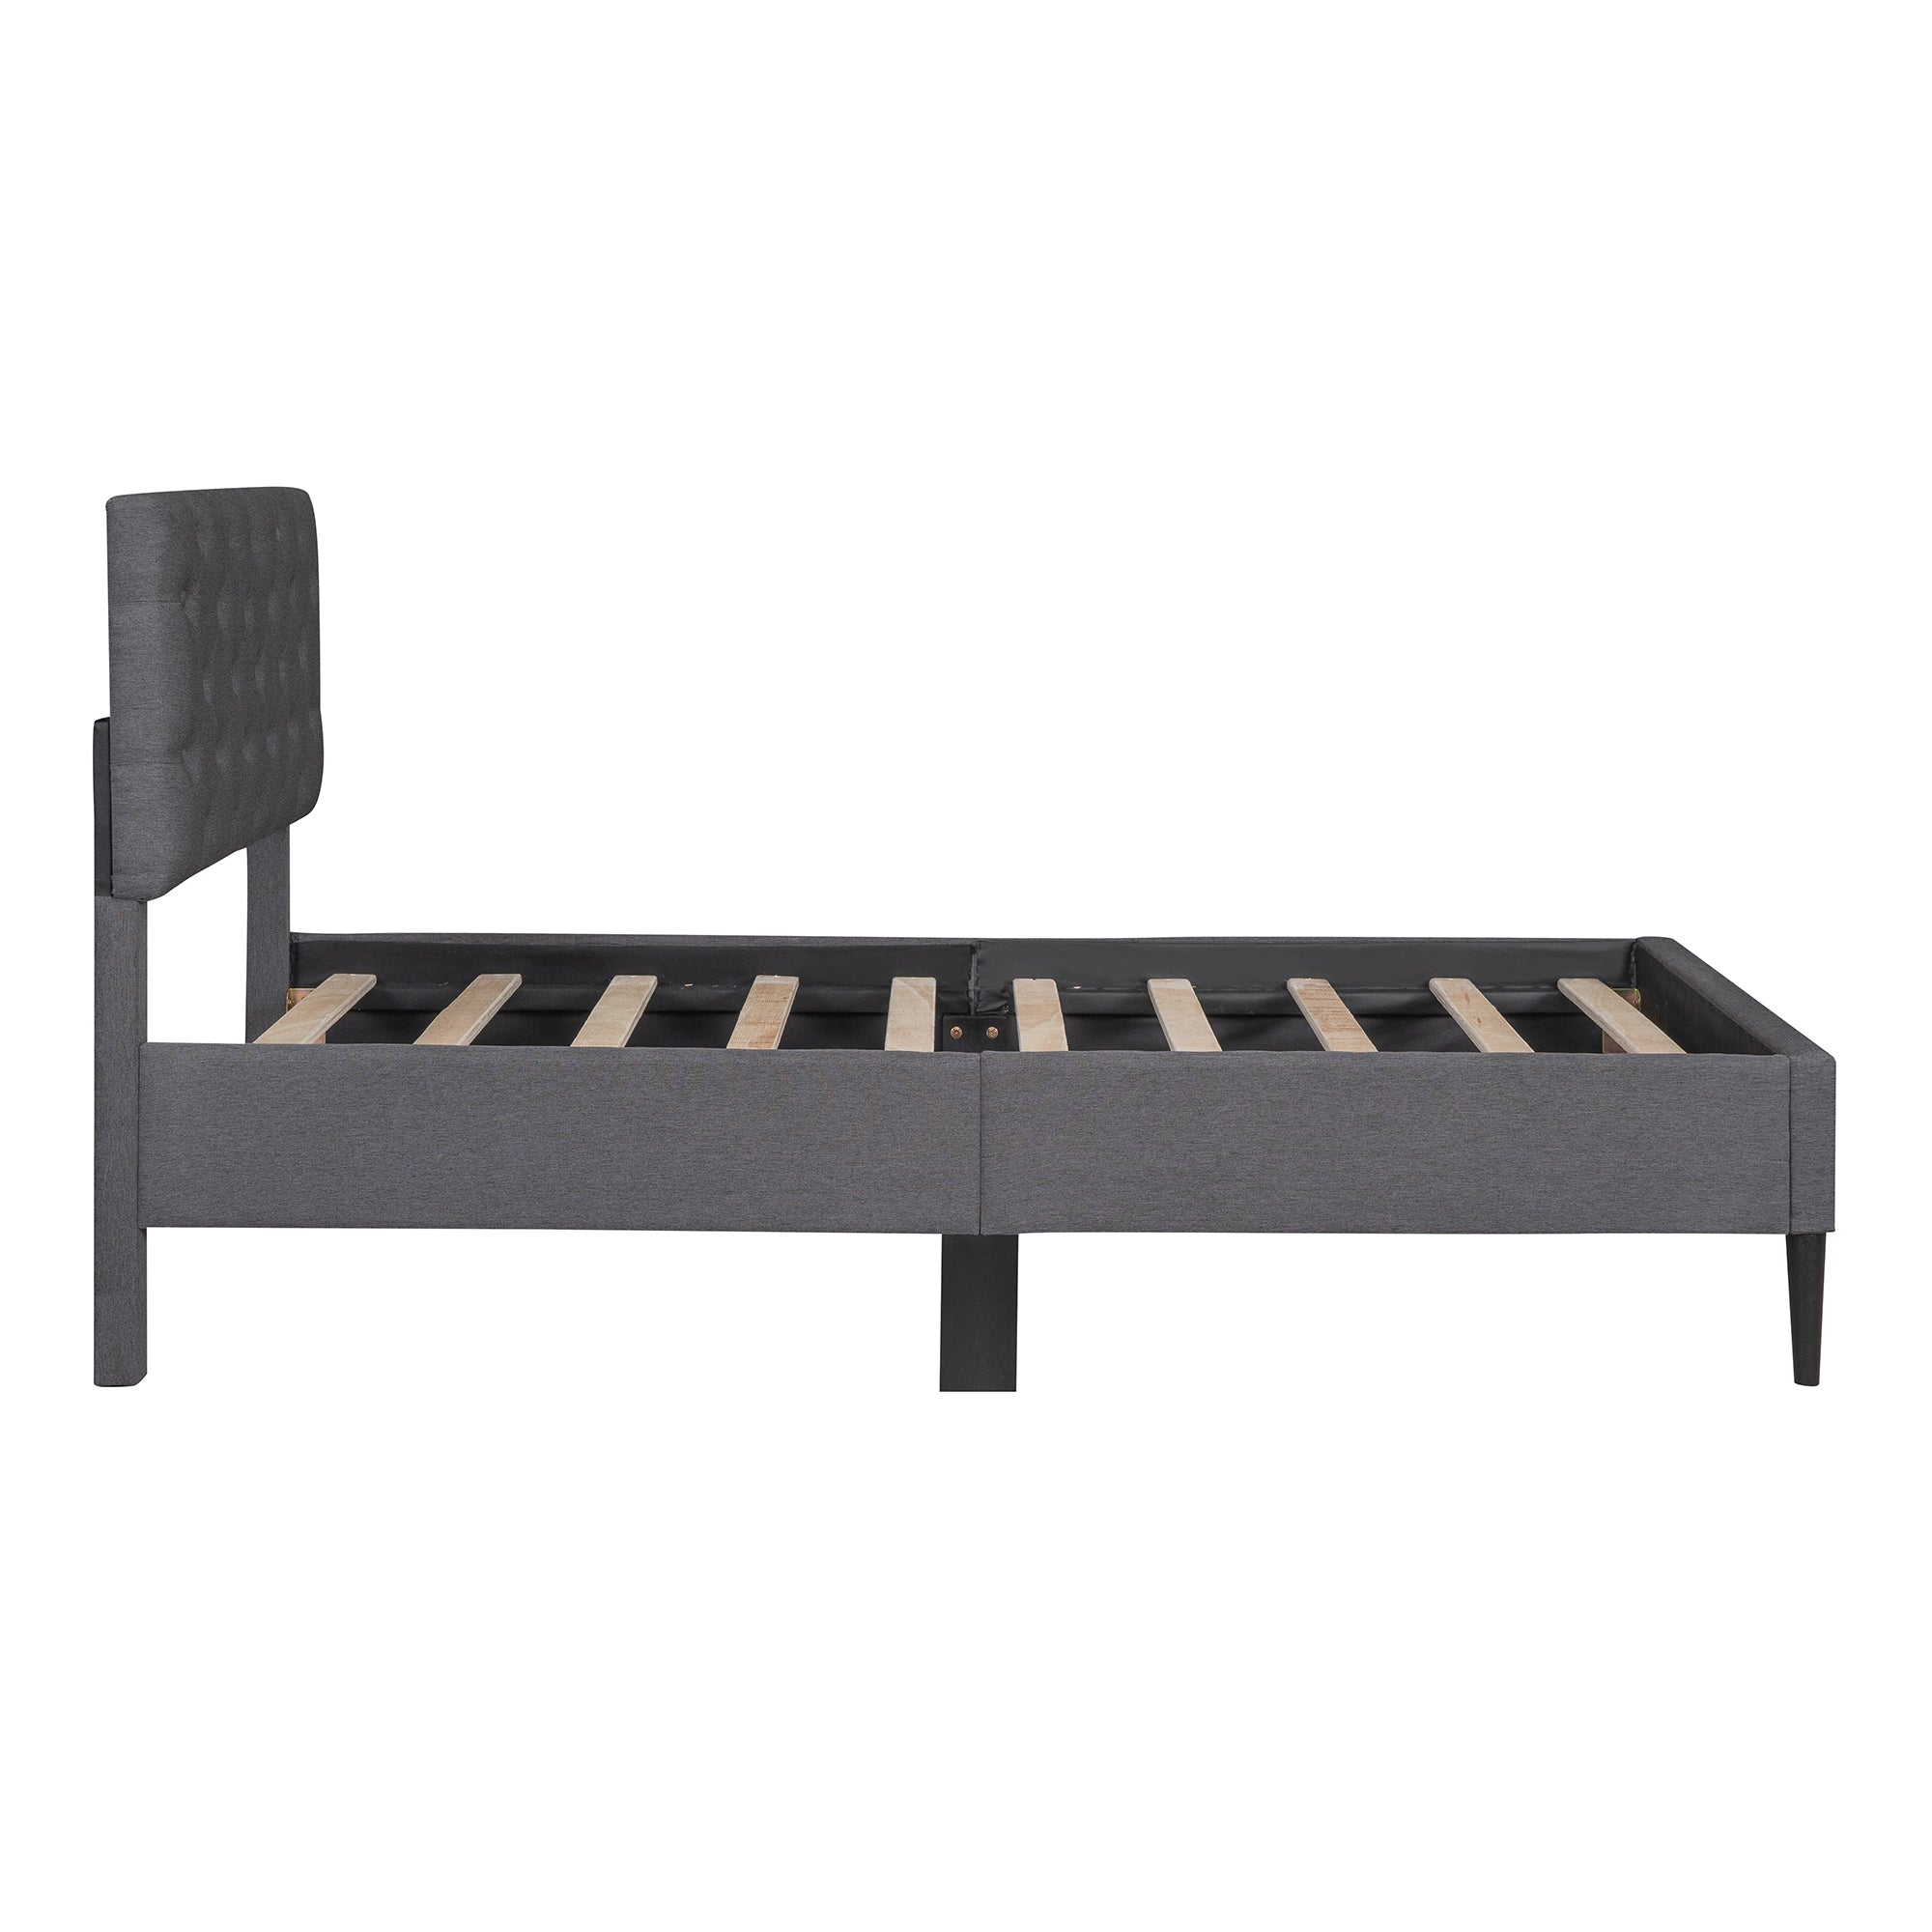 Upholstered Linen Platform Bed, Twin Size, Gray gray-linen